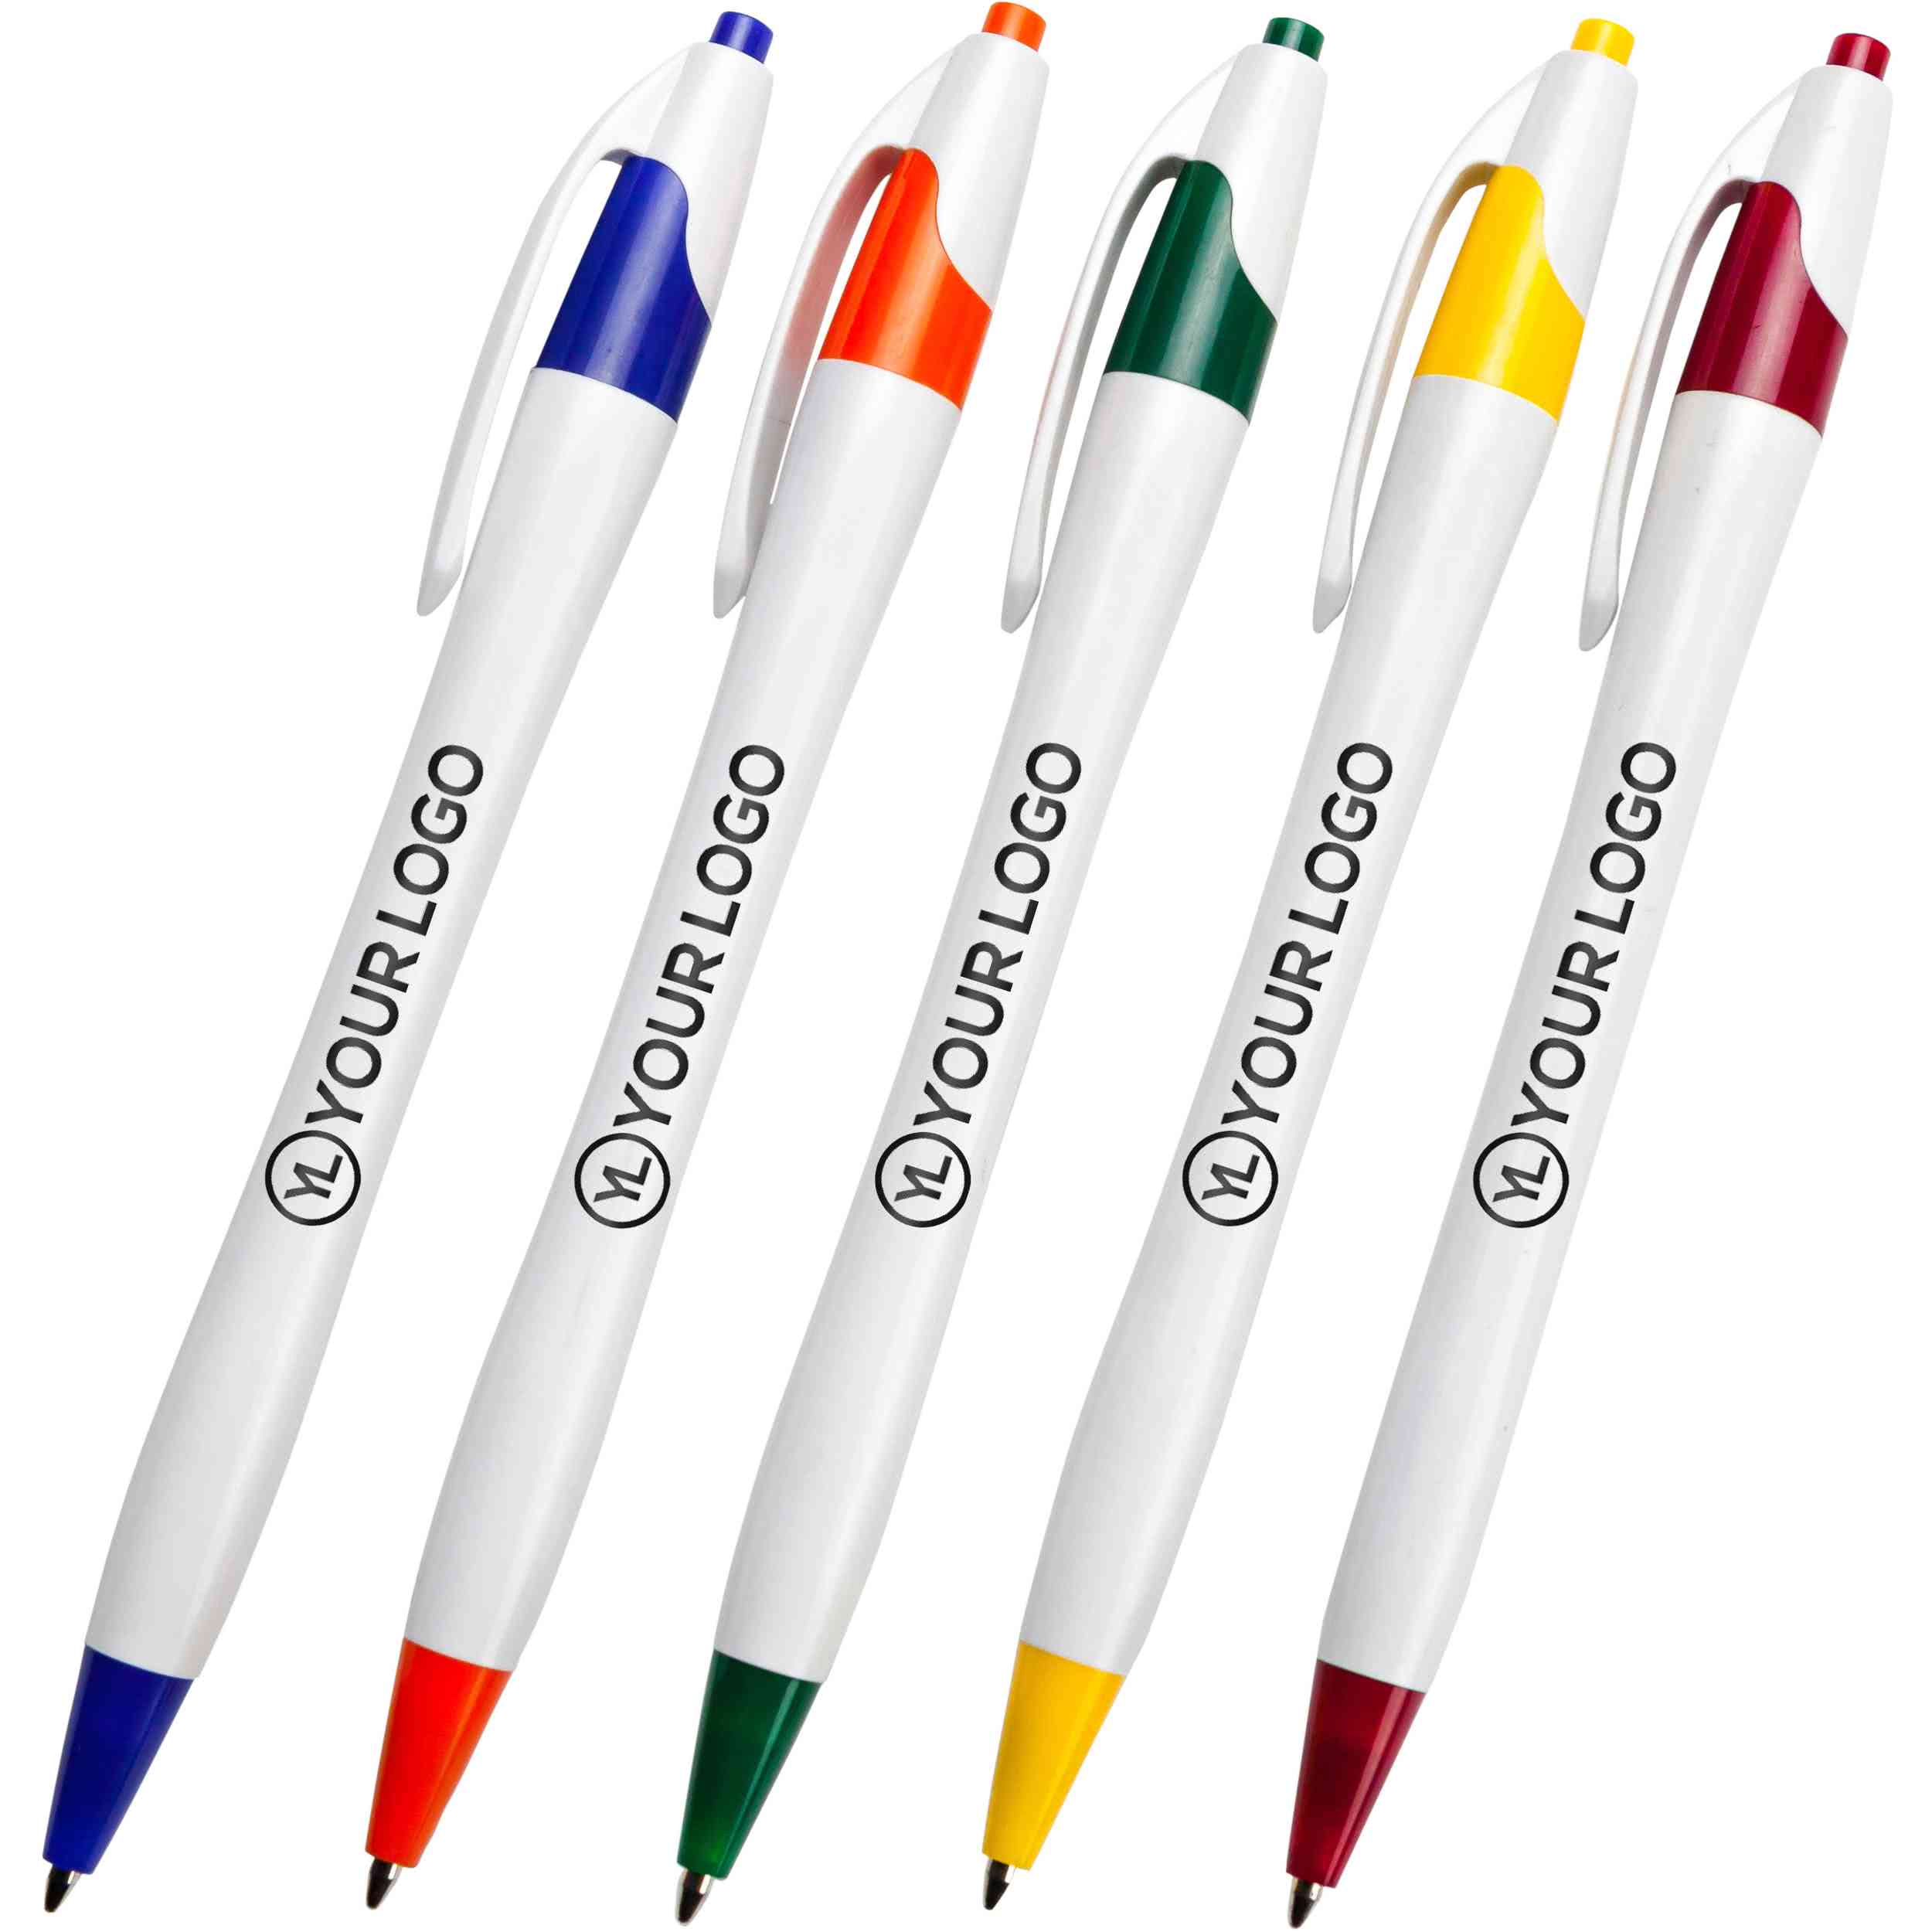 Pen Logo - Promotional Dart Pens with Custom Logo for $0.243 Ea.